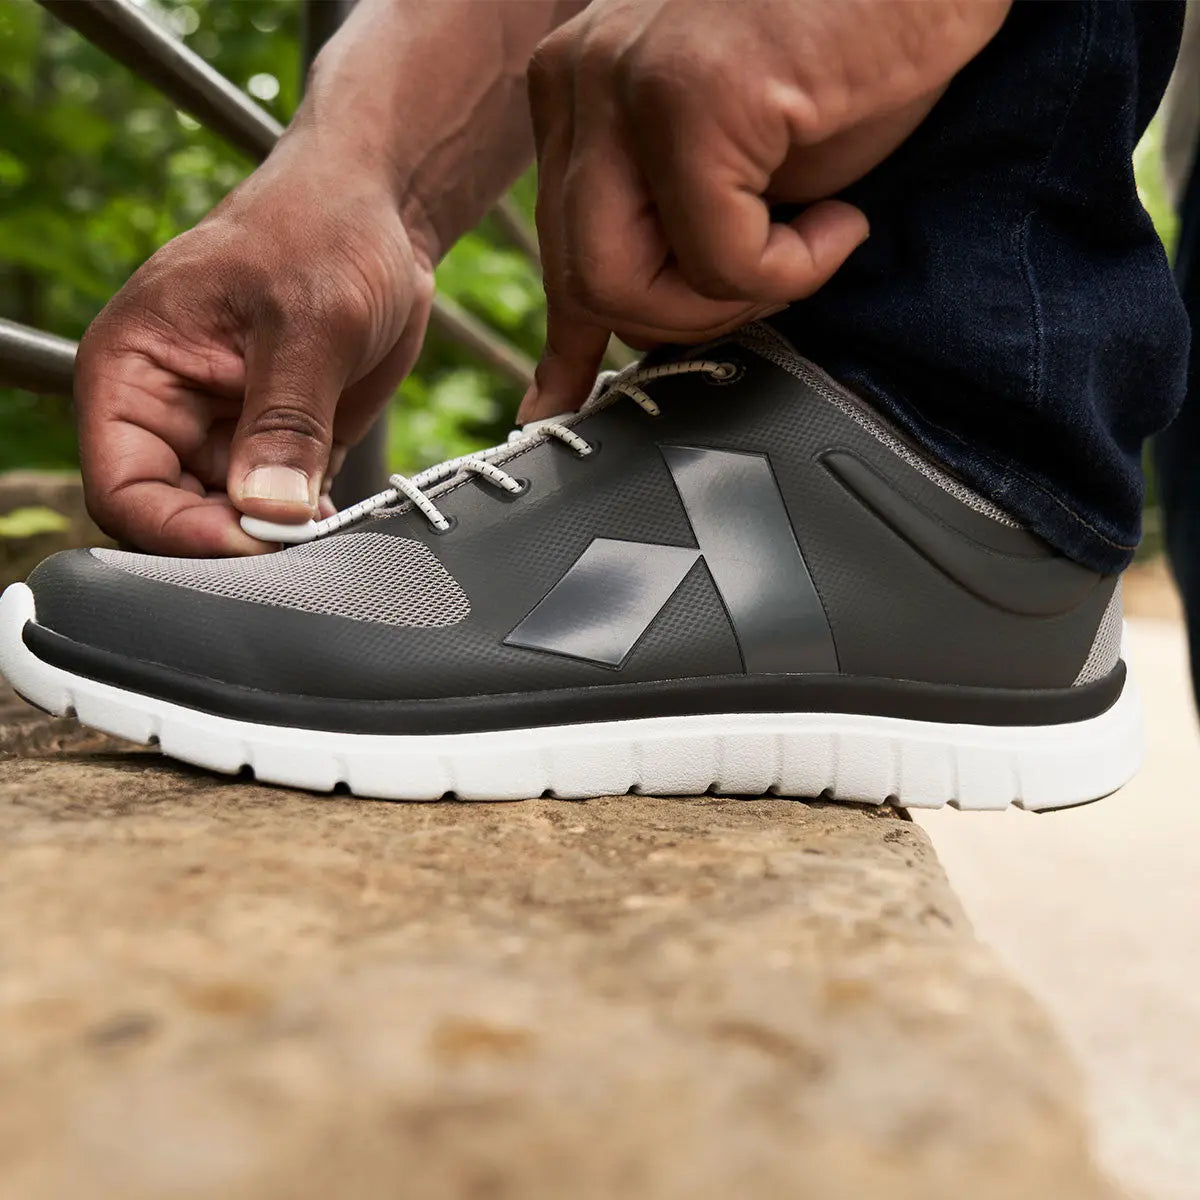 Anodyne Men's No.22 Sport Runner - Grey enjoying shoes on a daily walk